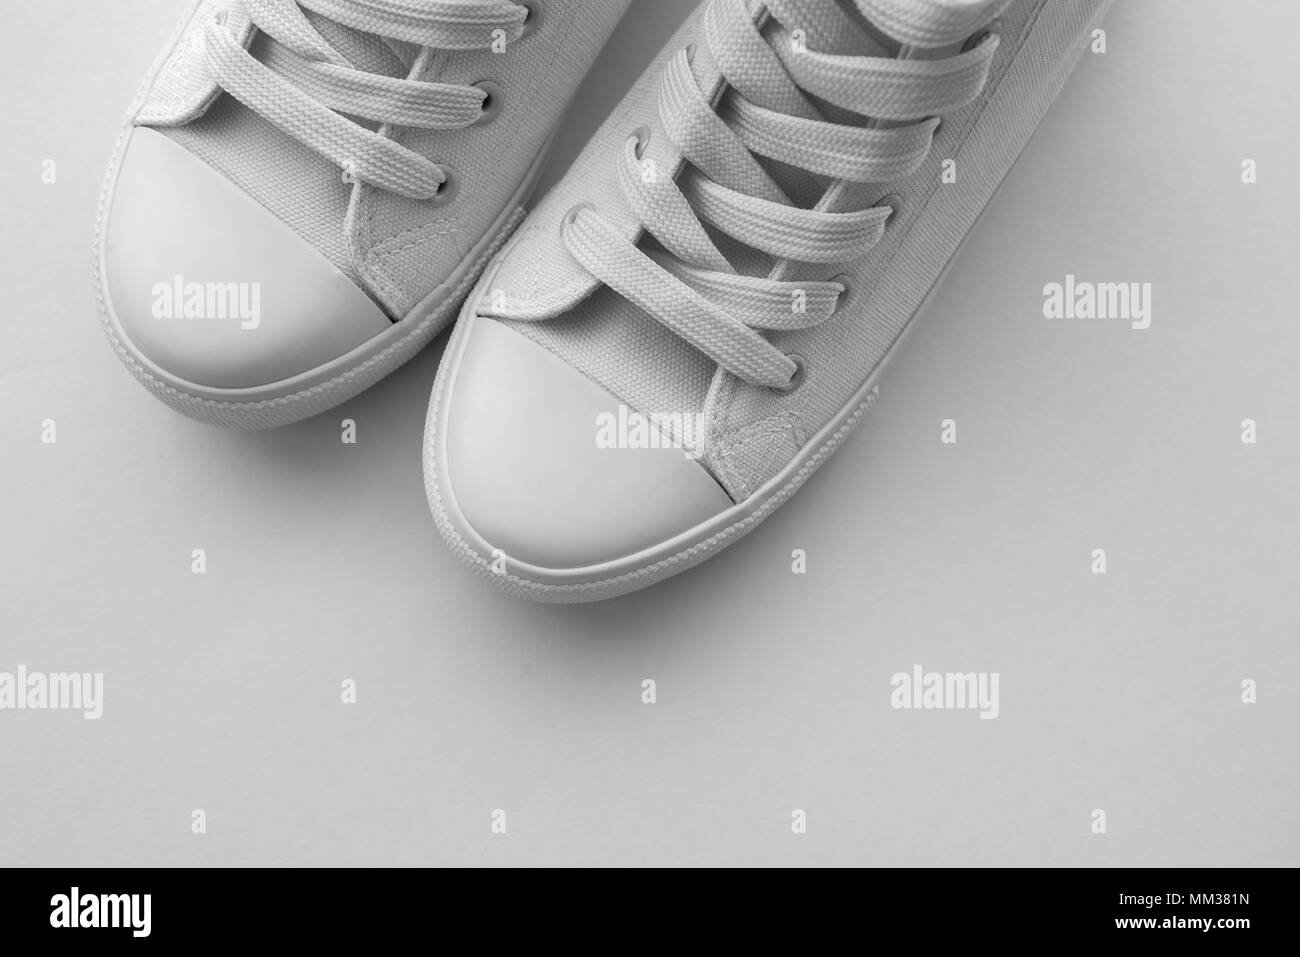 Par de zapatillas blancas con copia espacio modernos e informales, zapatos  de tela Fotografía de stock - Alamy